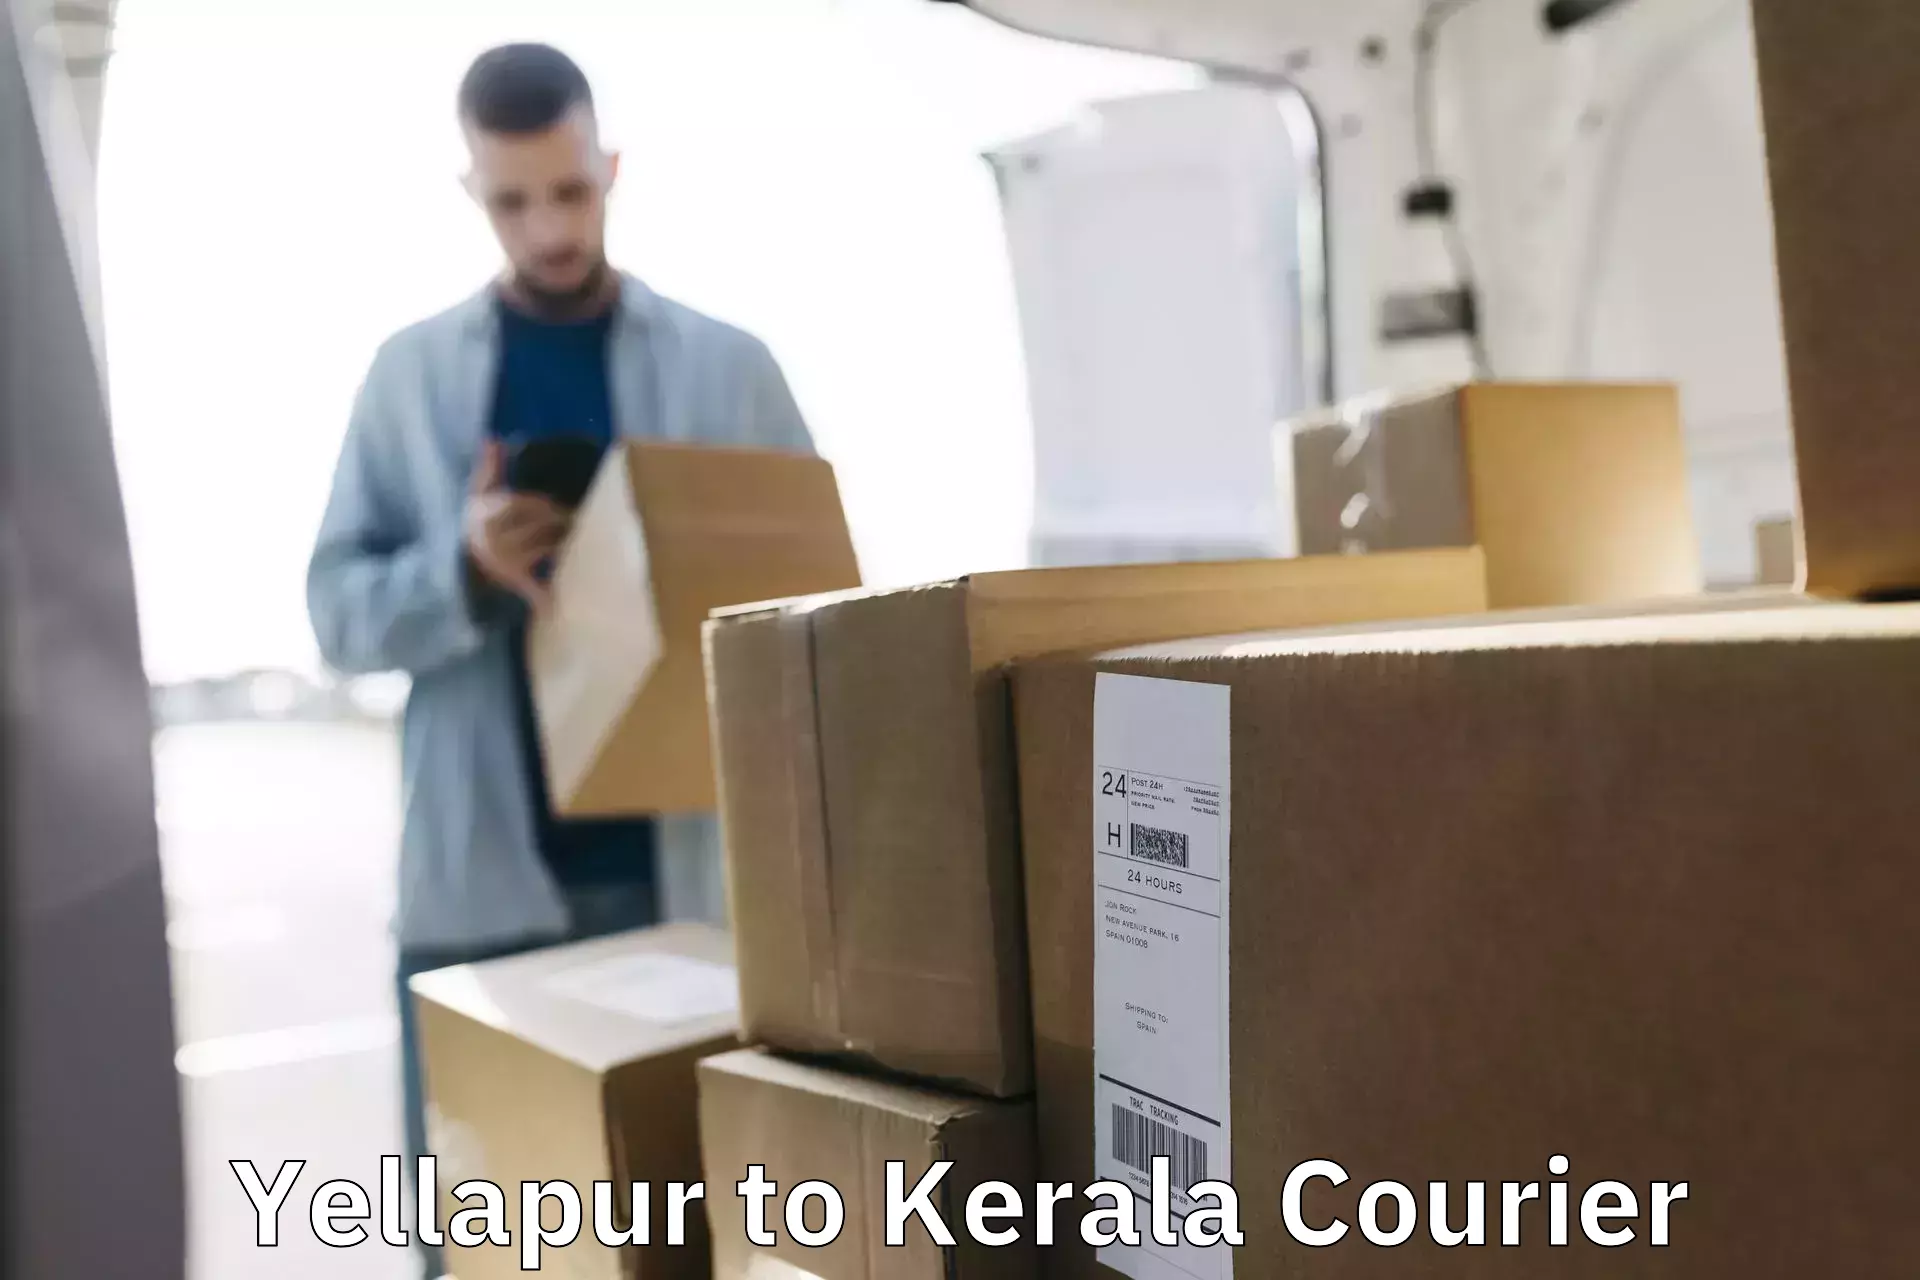 Digital courier platforms Yellapur to Ranni